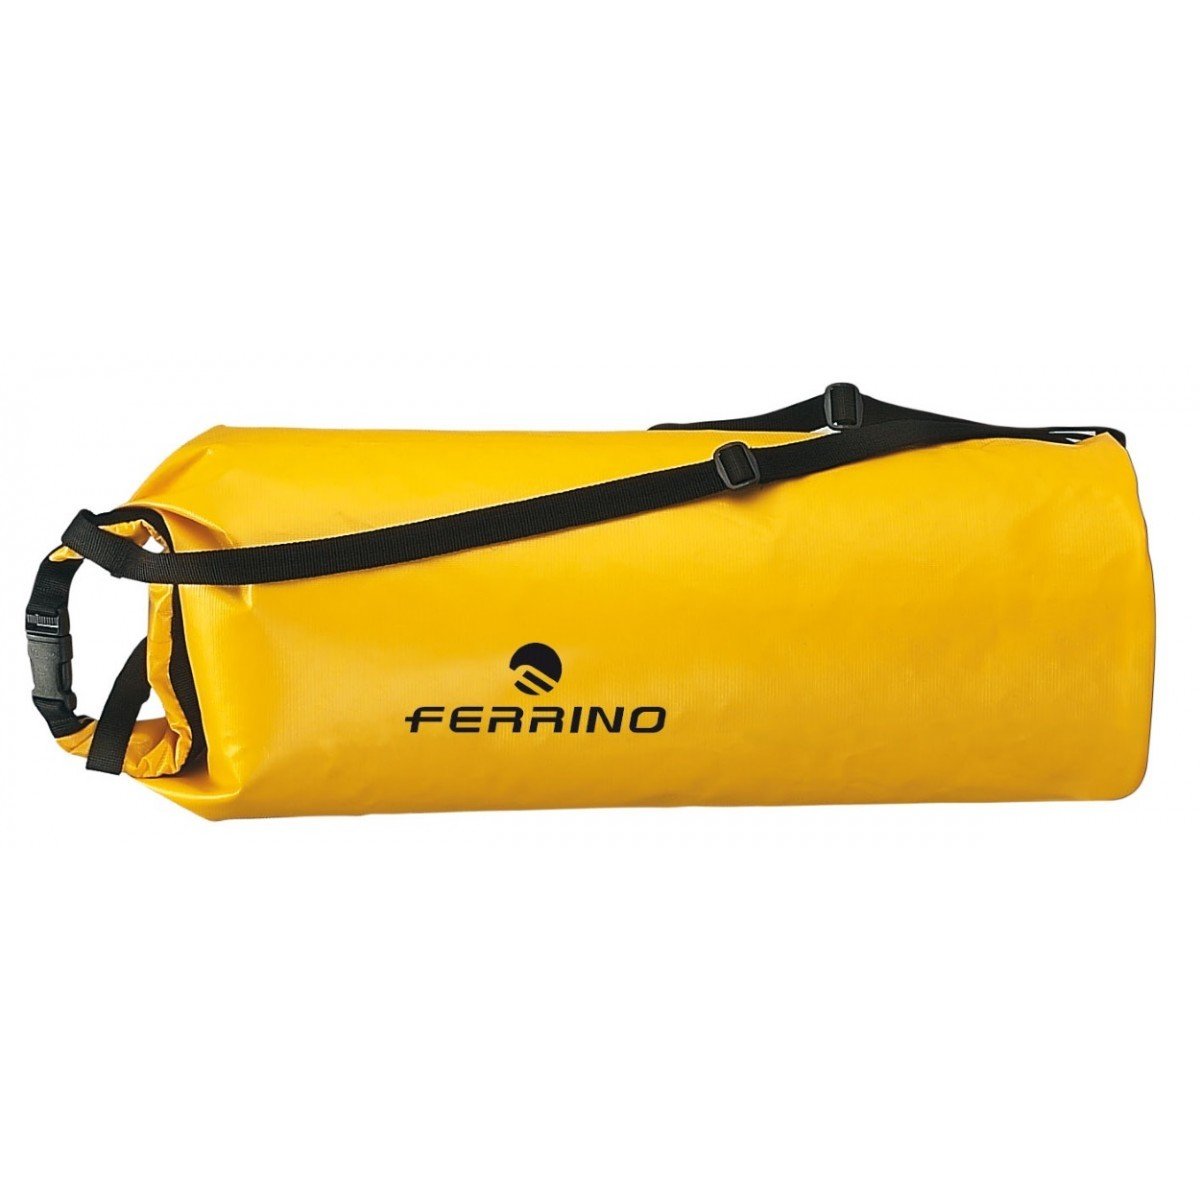 Ferrino Aquastop XL